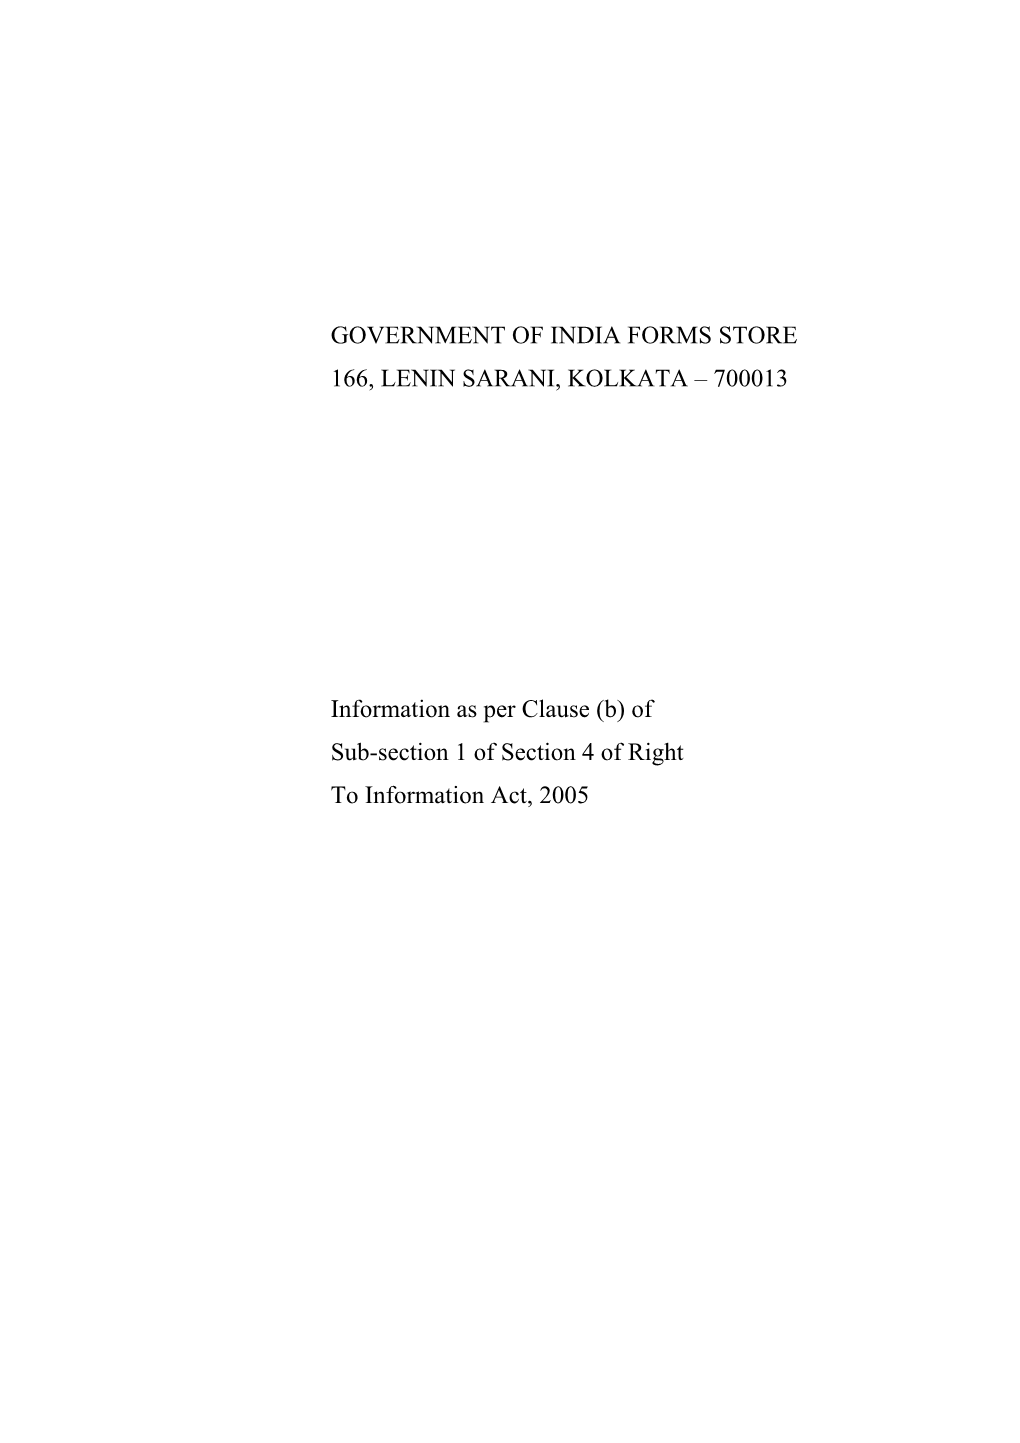 Government of India Forms Store 166, Lenin Sarani, Kolkata – 700013